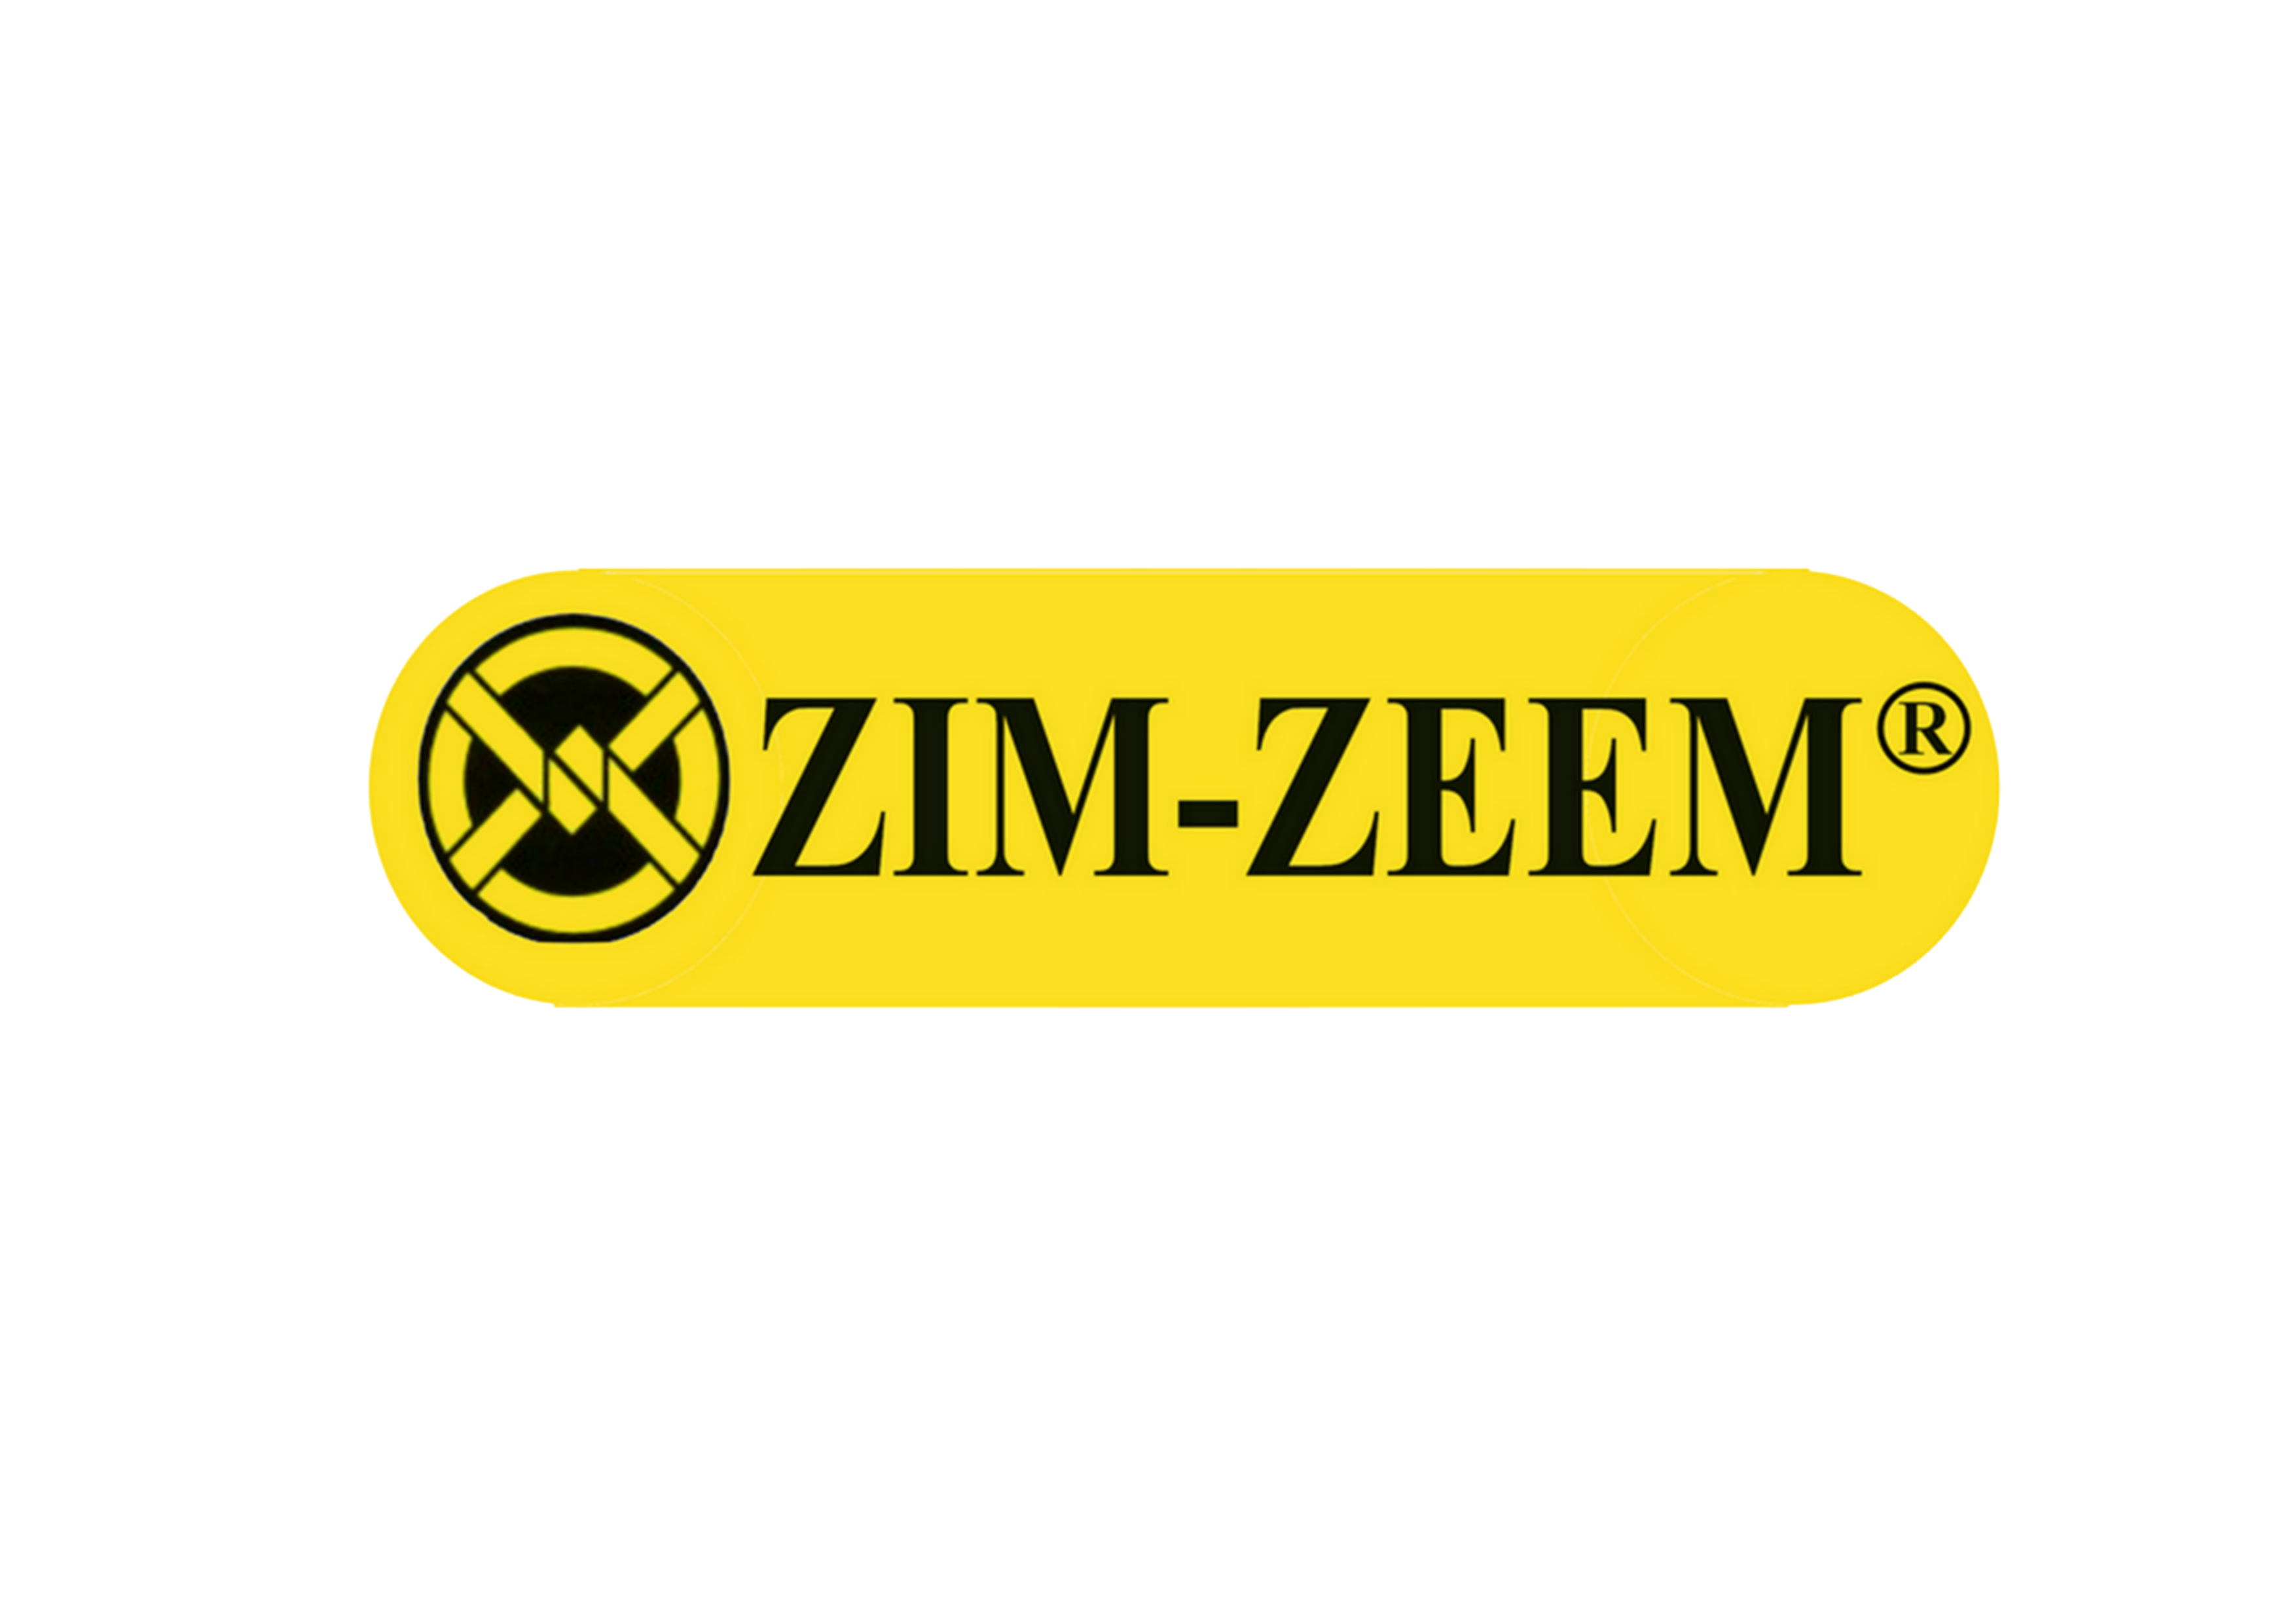 ZIM-ZEEM